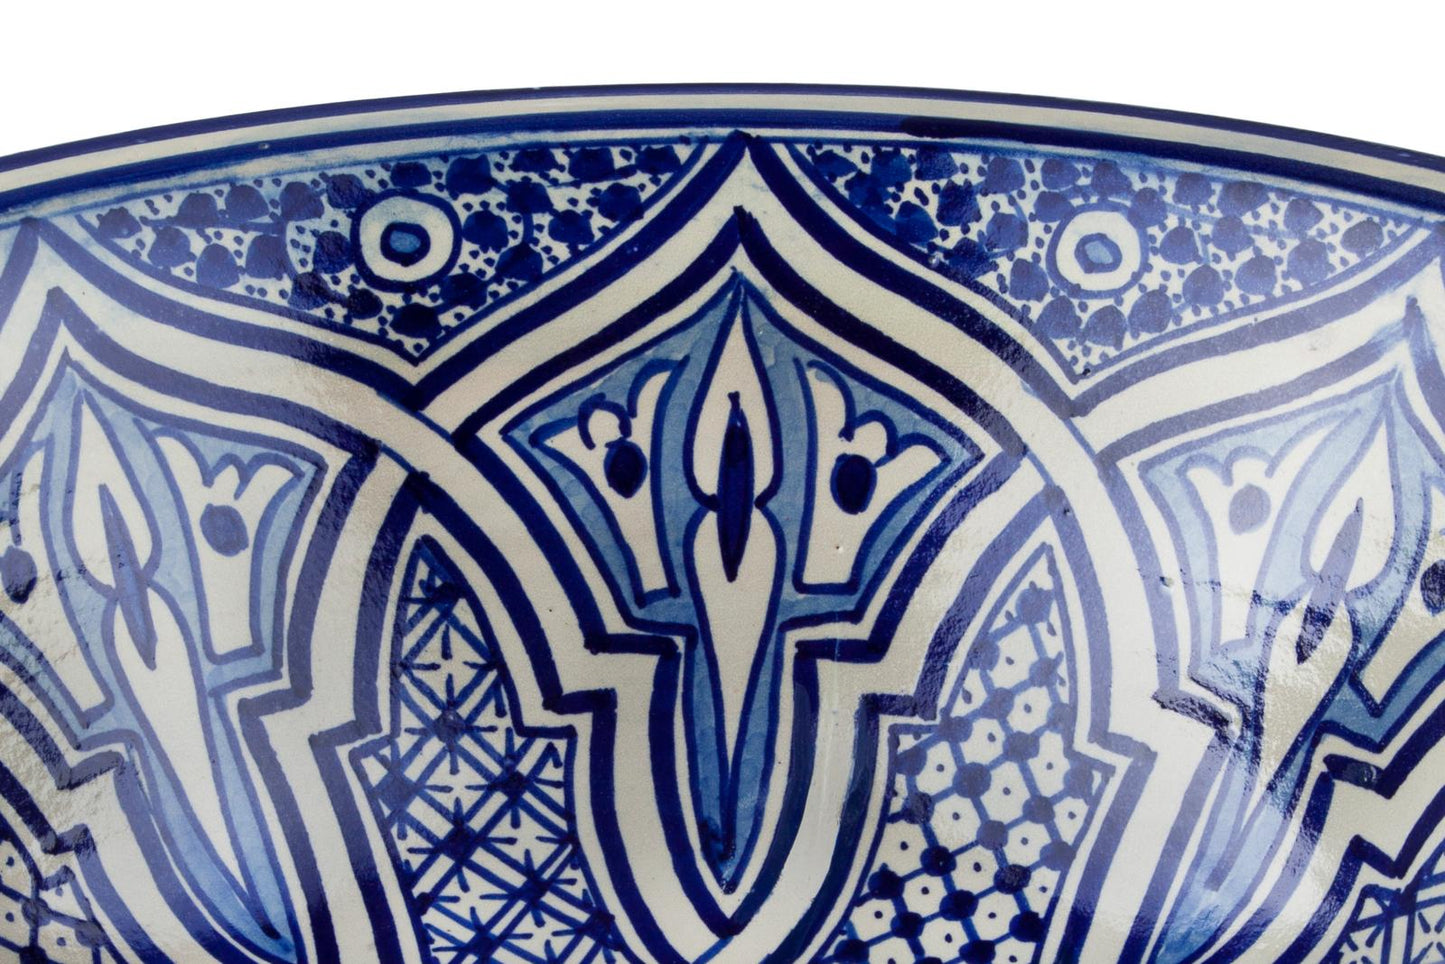 Moroccan sink | moroccan ceramic sink | bathroom sink | Bleu sink #2